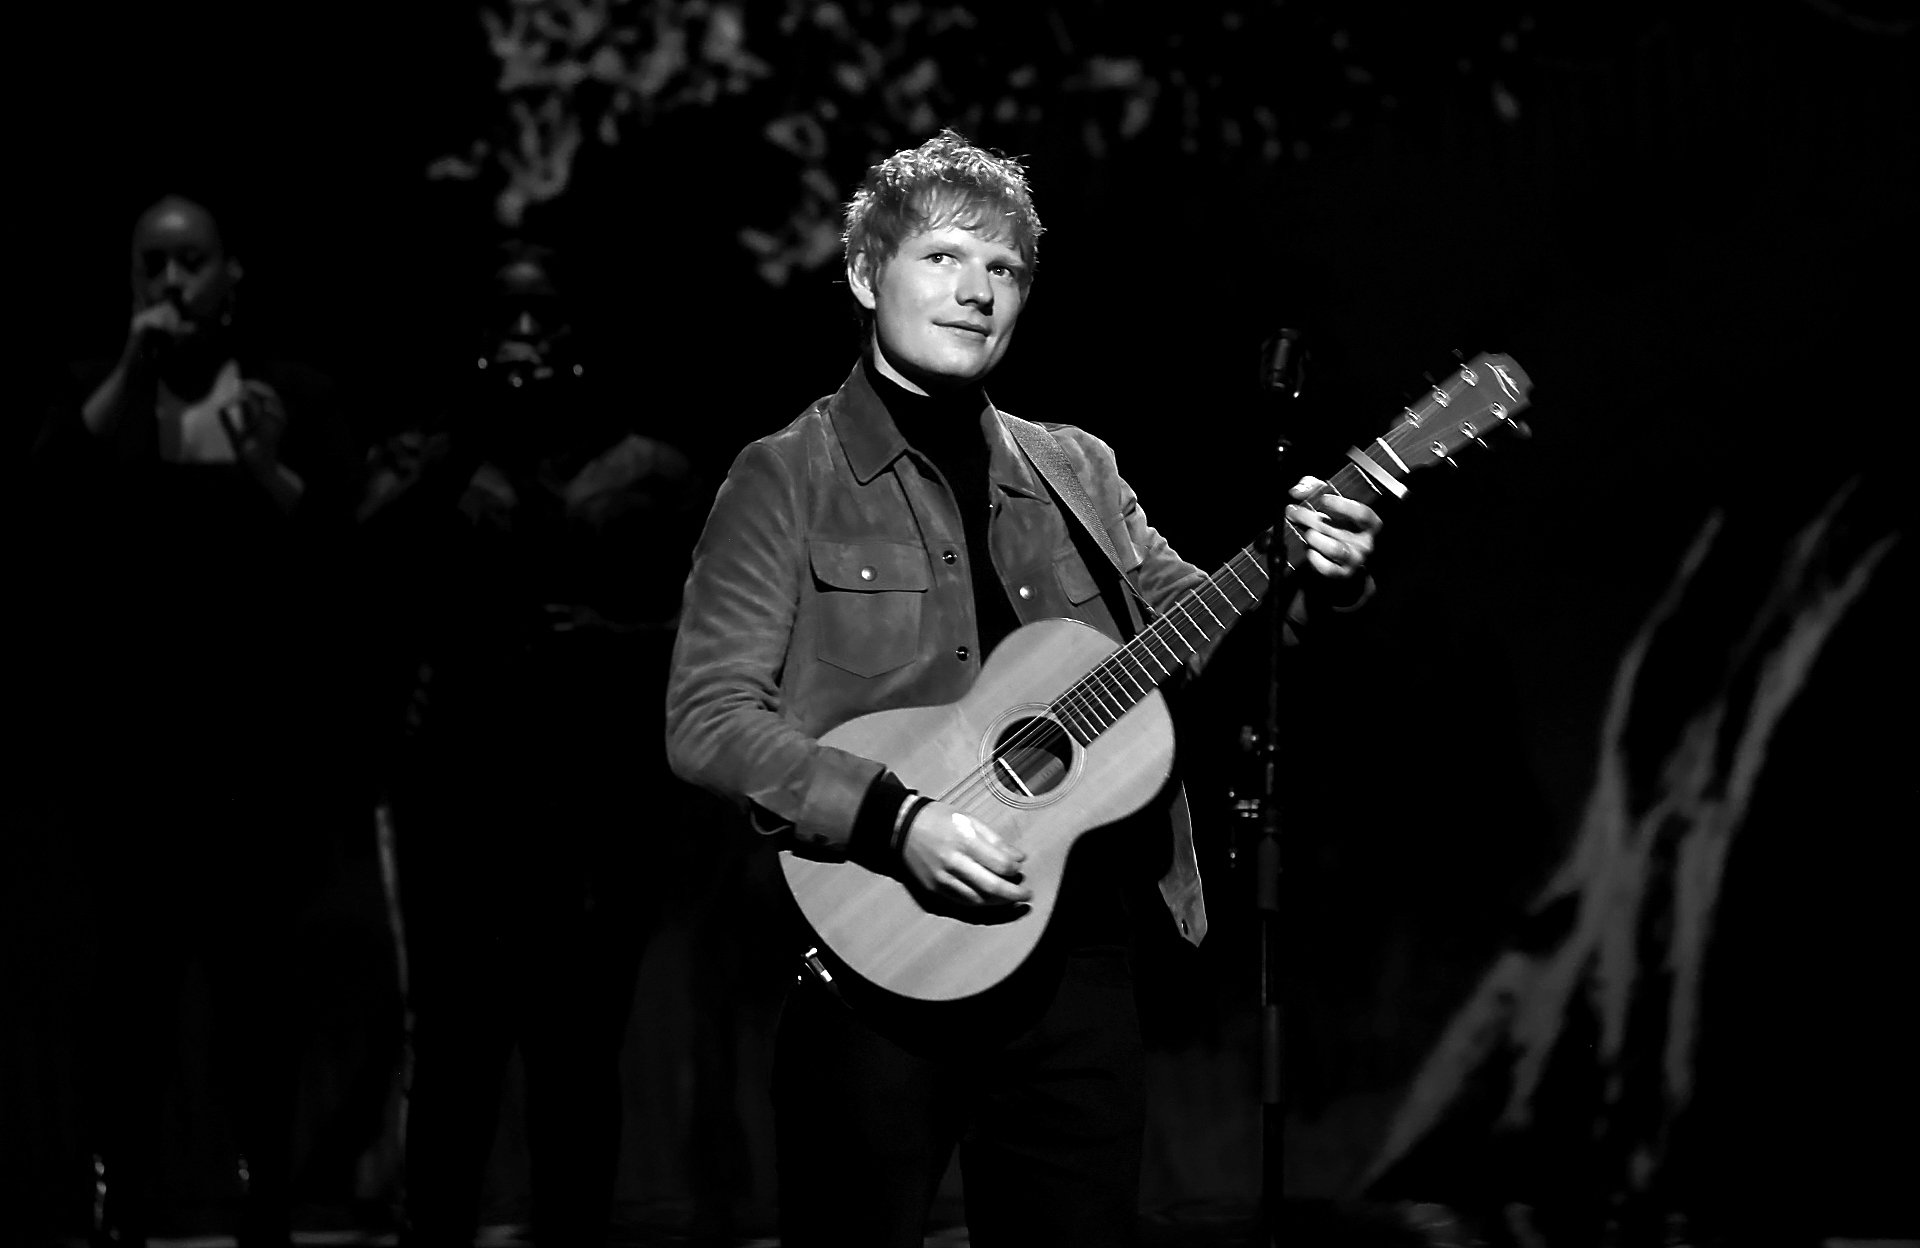 Ed Sheeran playing guitar